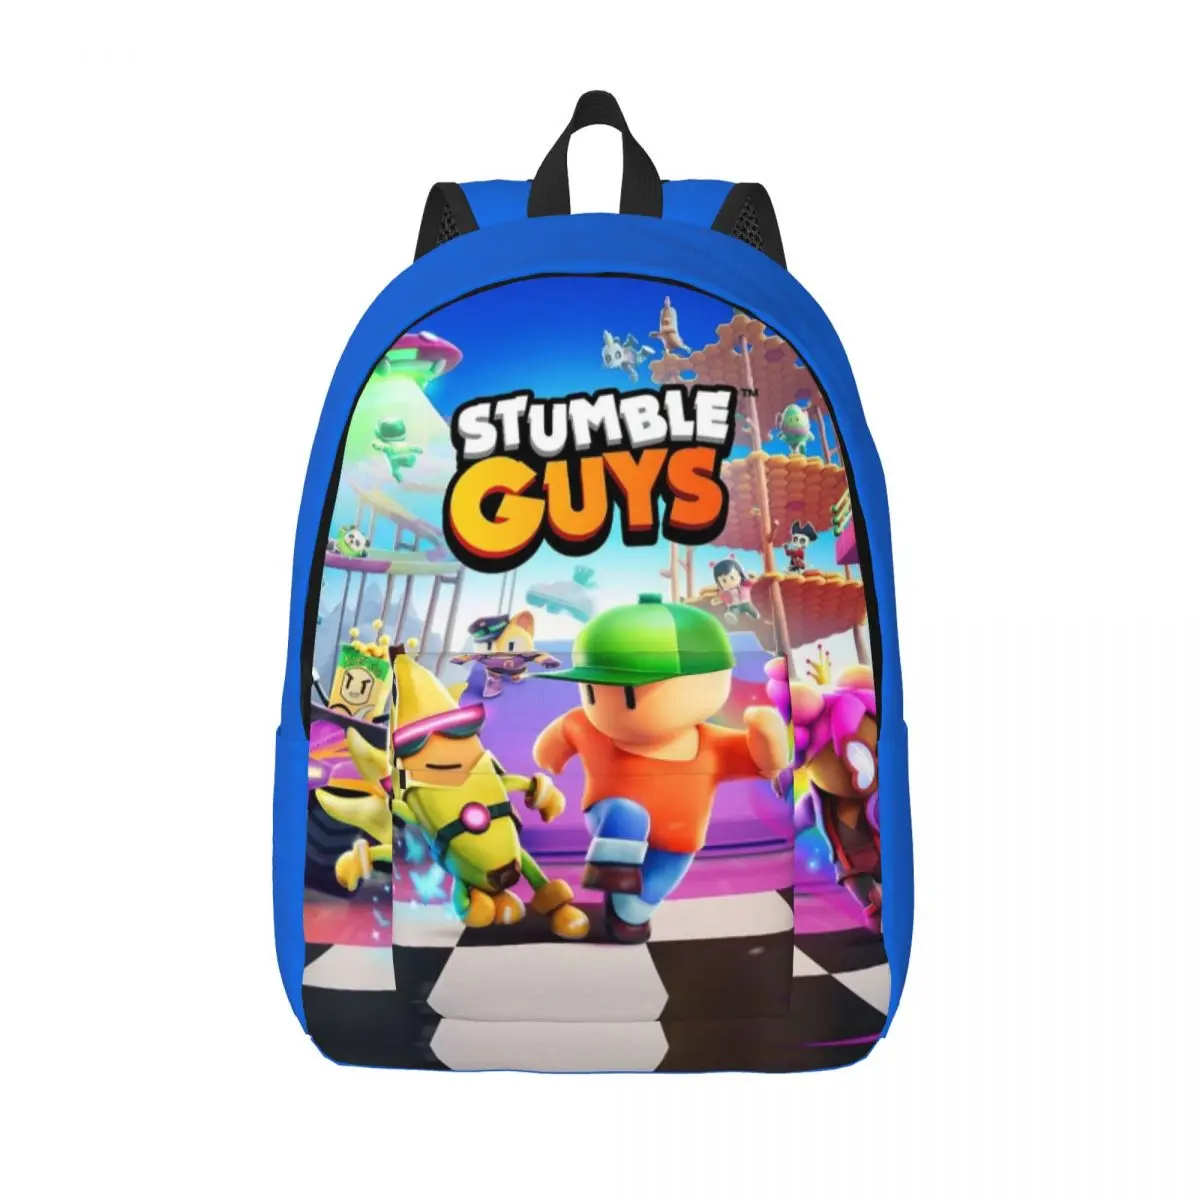 

Stumble Guys Backpack for Boy Girl Teenage Student School Bookbag Cartoon Game Daypack Primary Bag Hiking